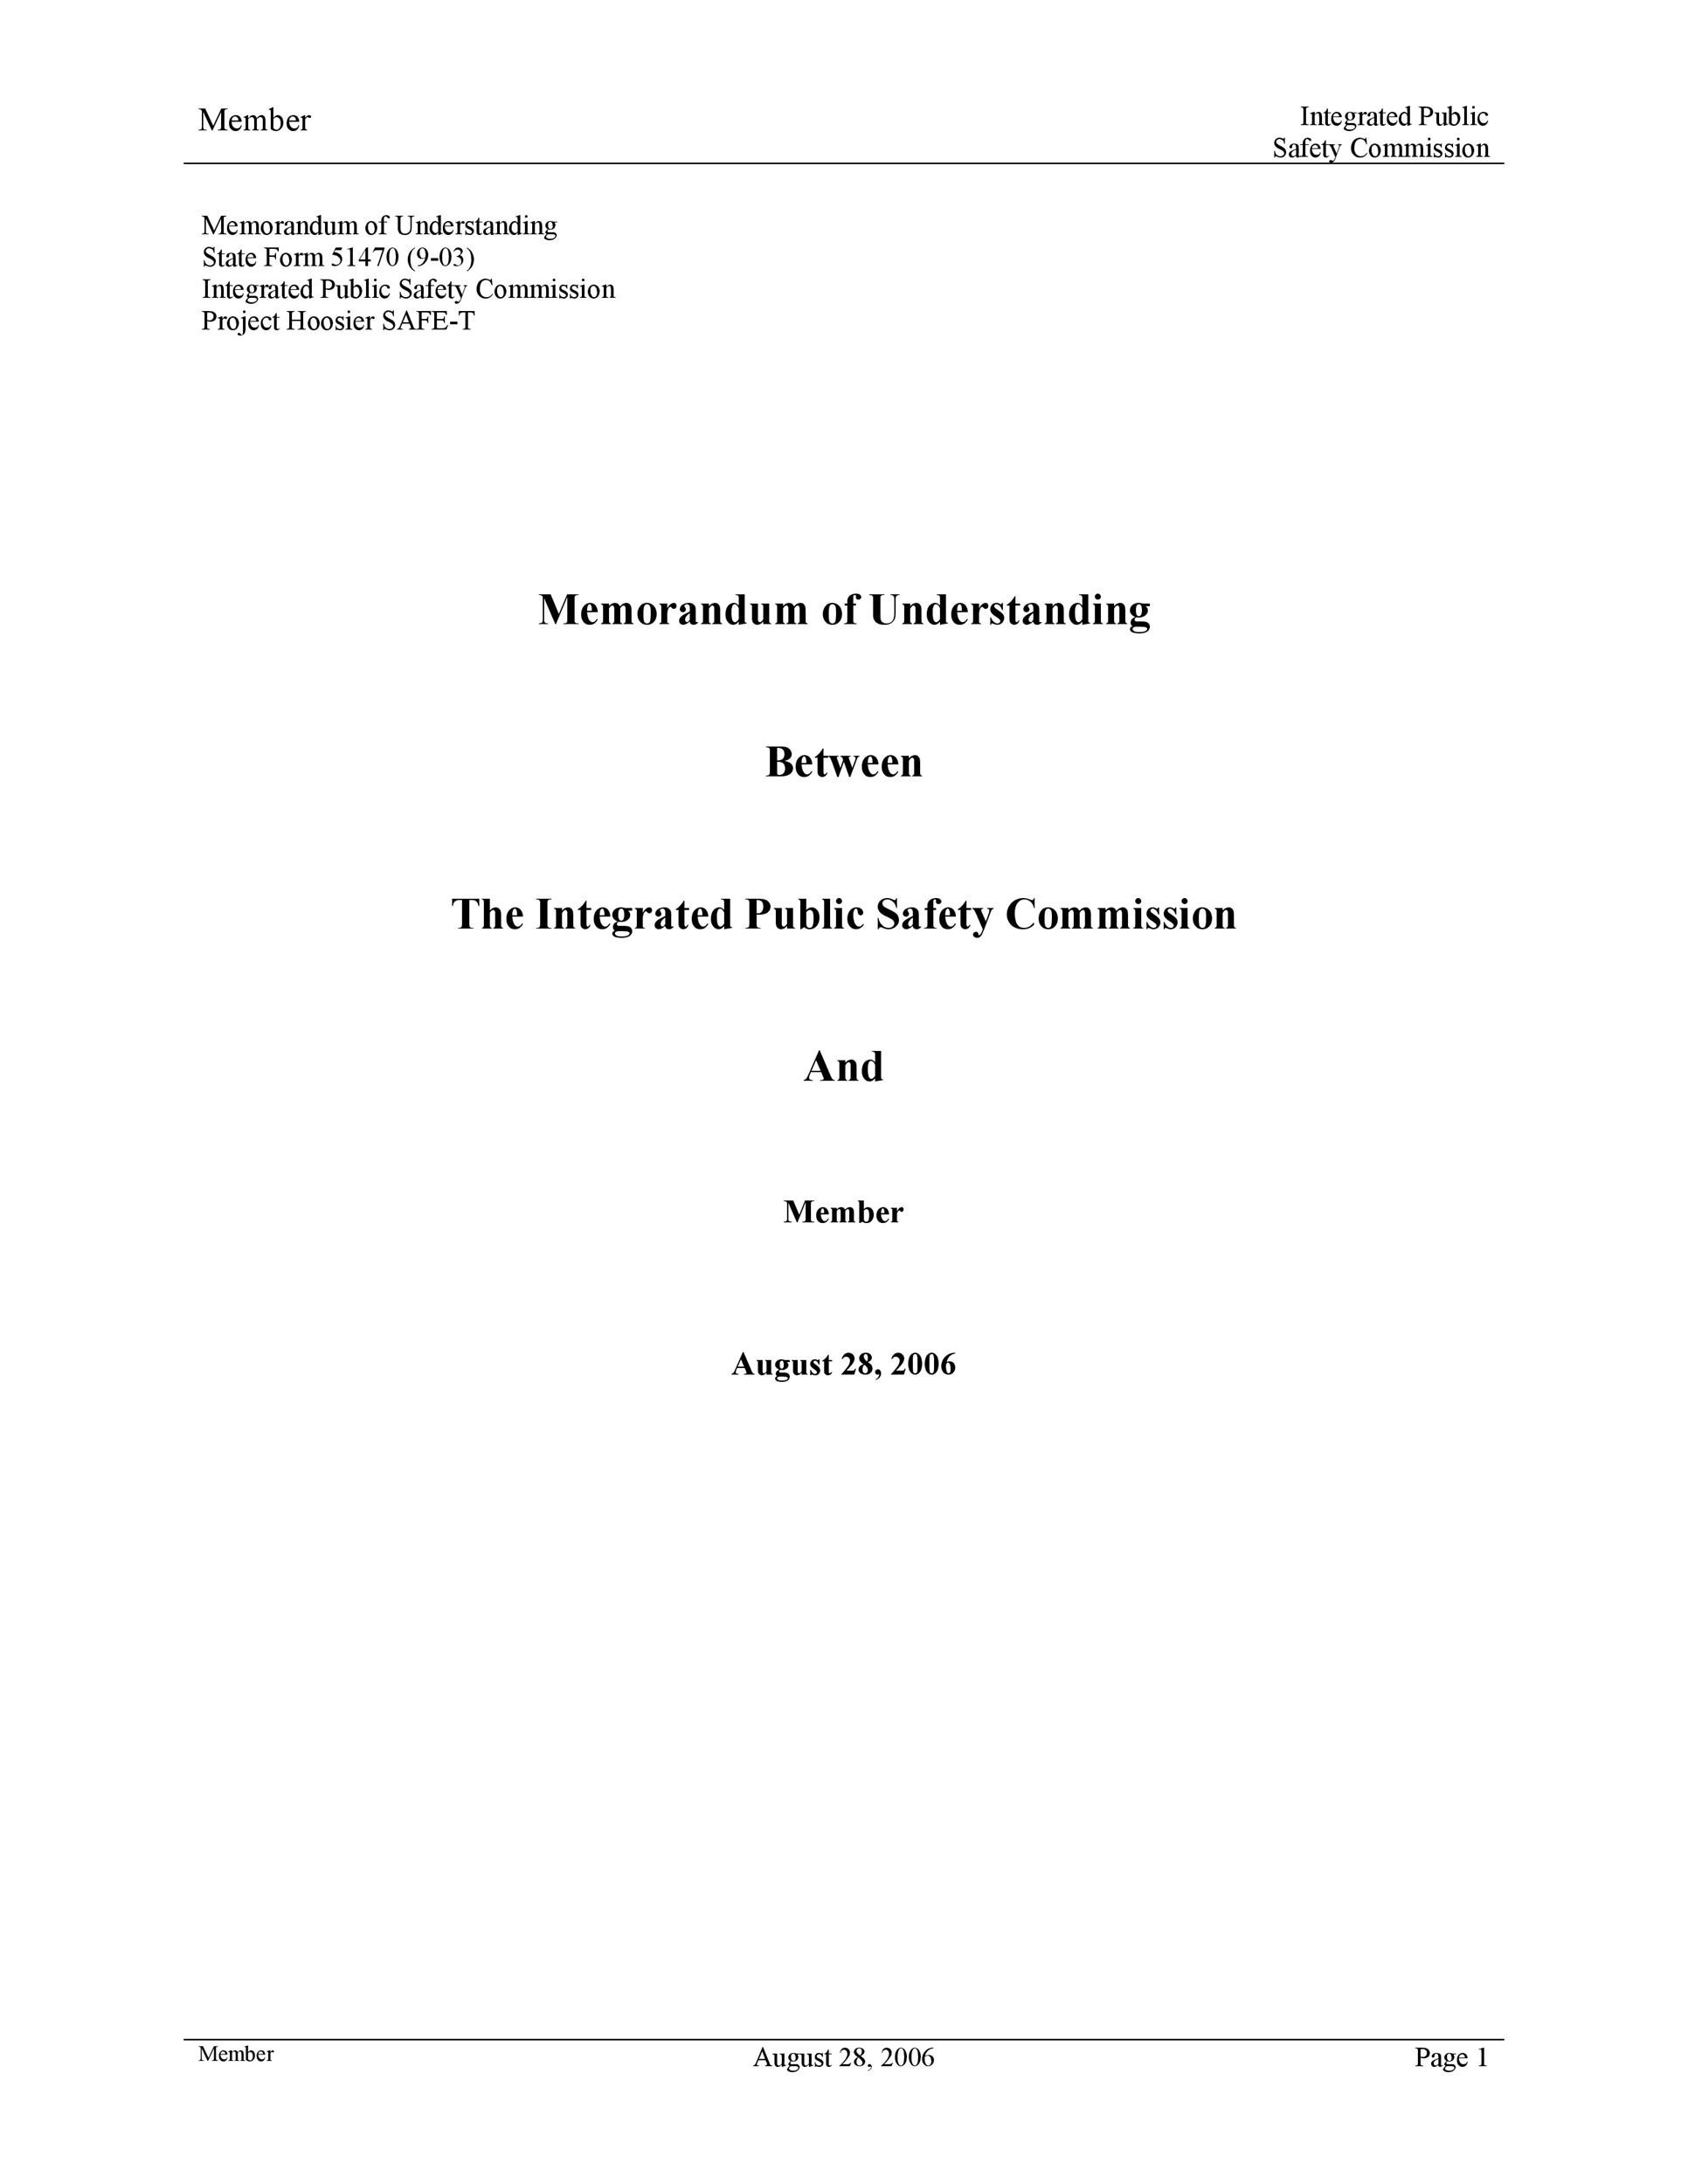 Free Memorandum of Understanding Template 32